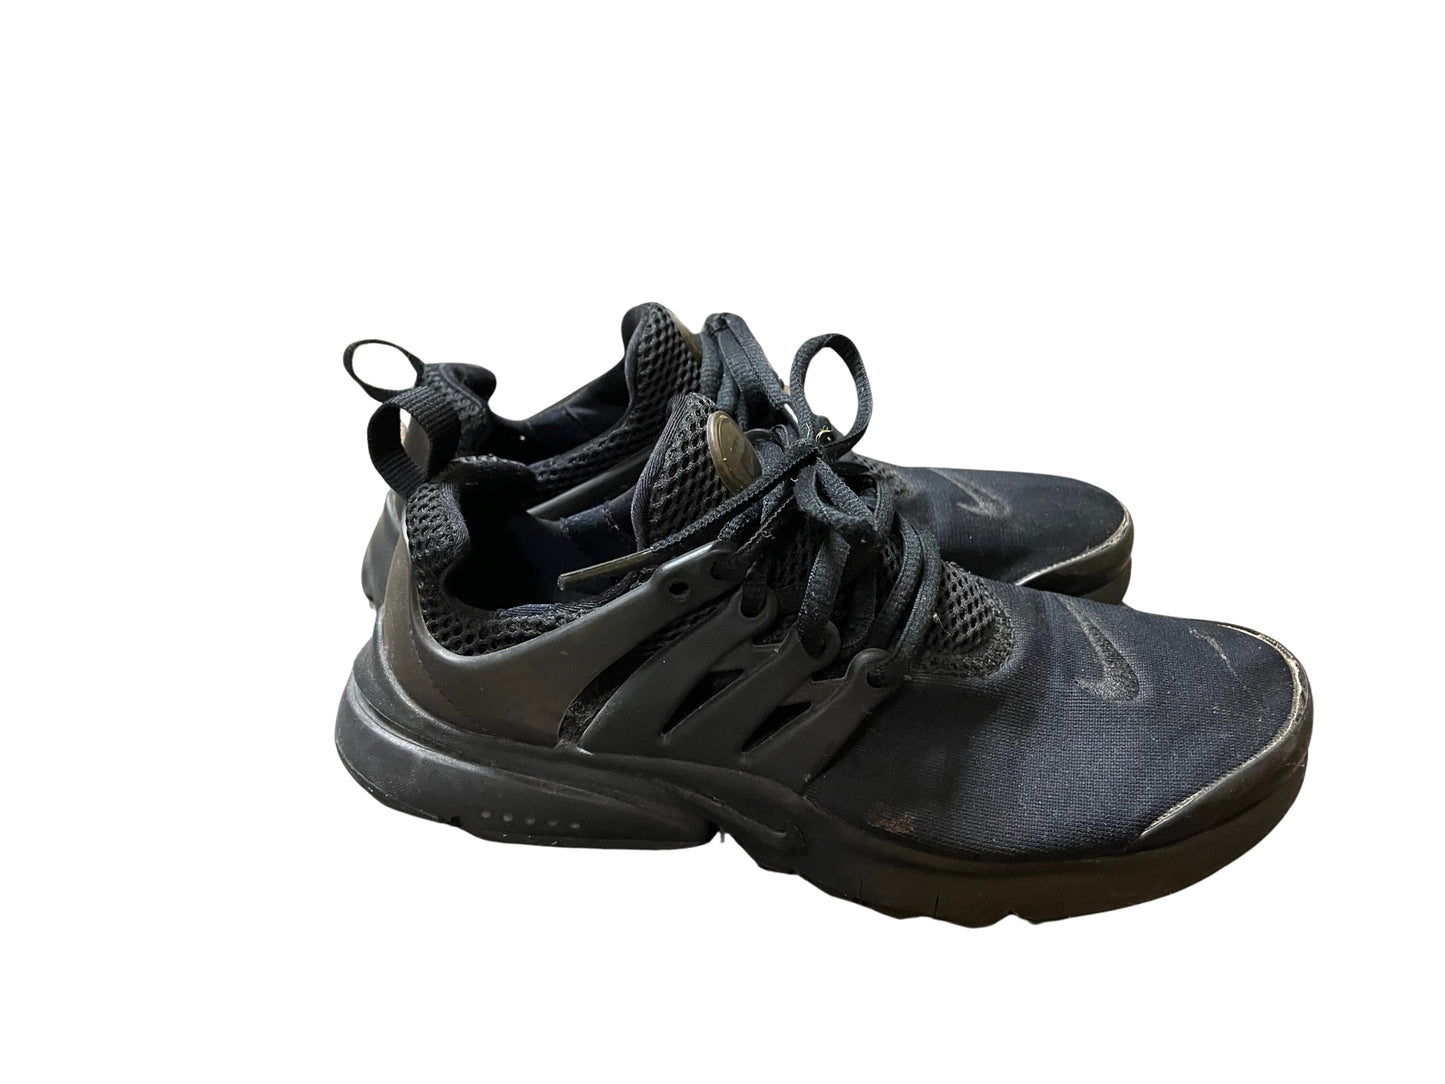 Nike Size 5 Black sneakers